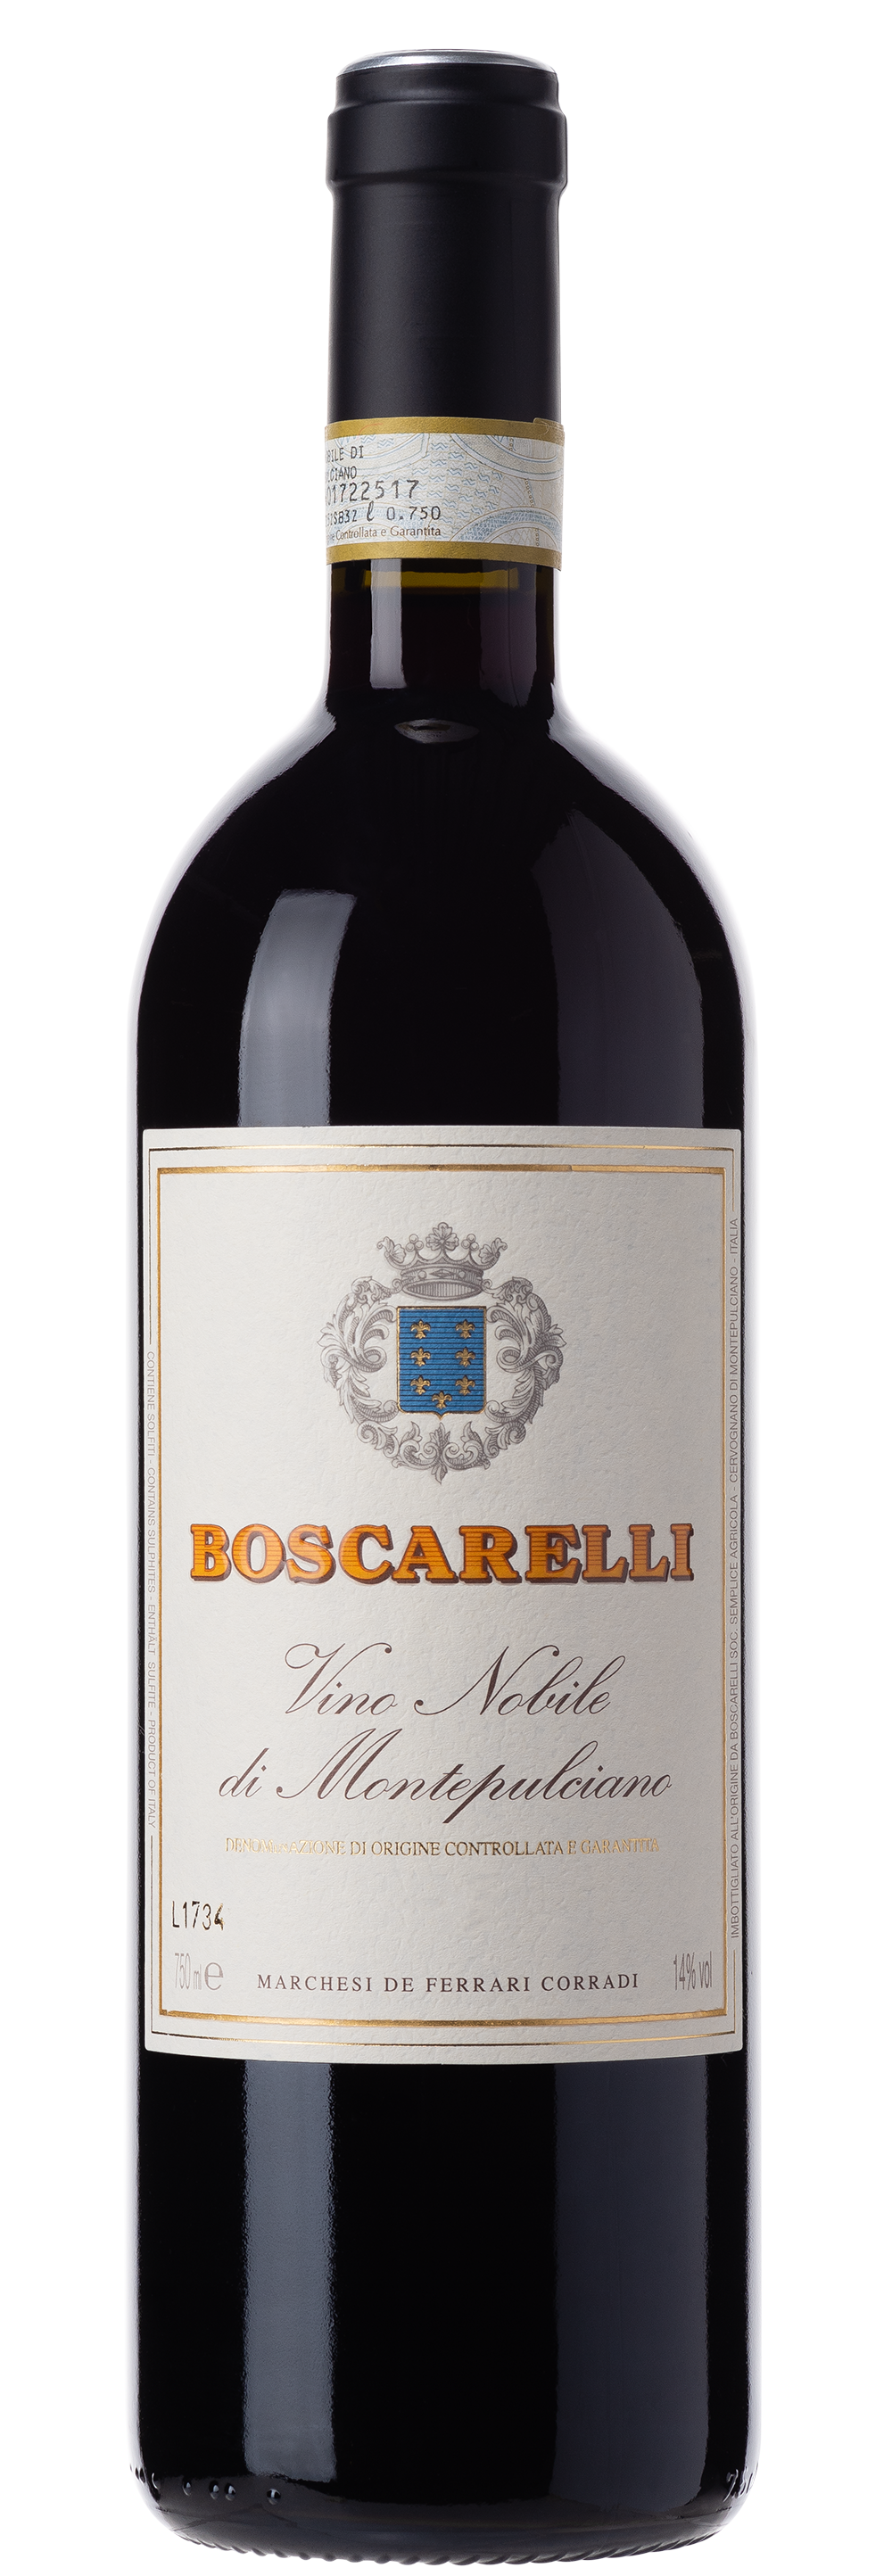 Boscarelli Vino Nobile di viDeli einfach - Montepulciano Wein | guter